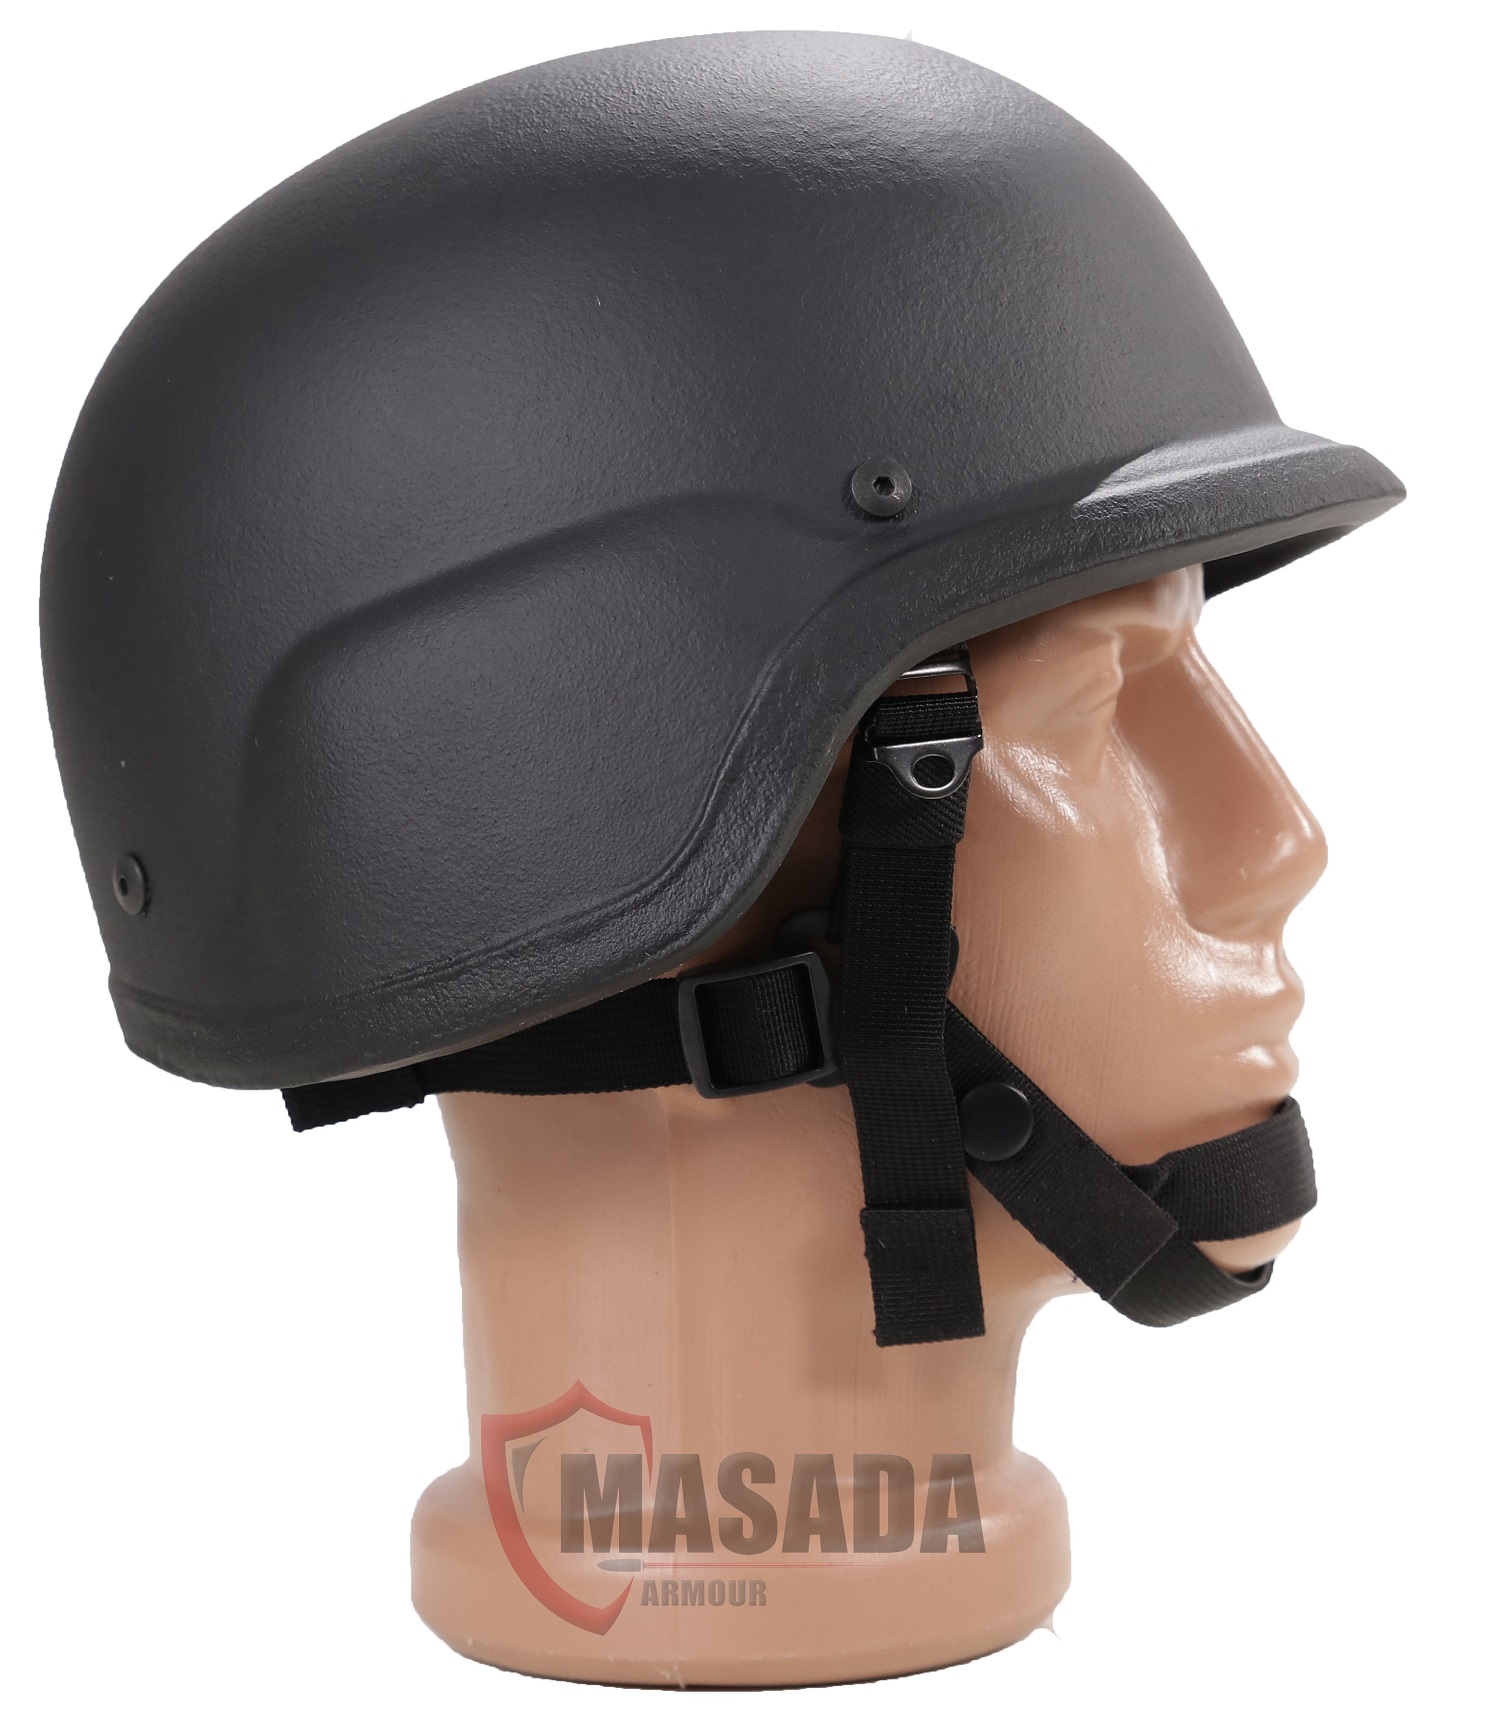 Ballistic Helmet Protection Level IIIA - PASGT